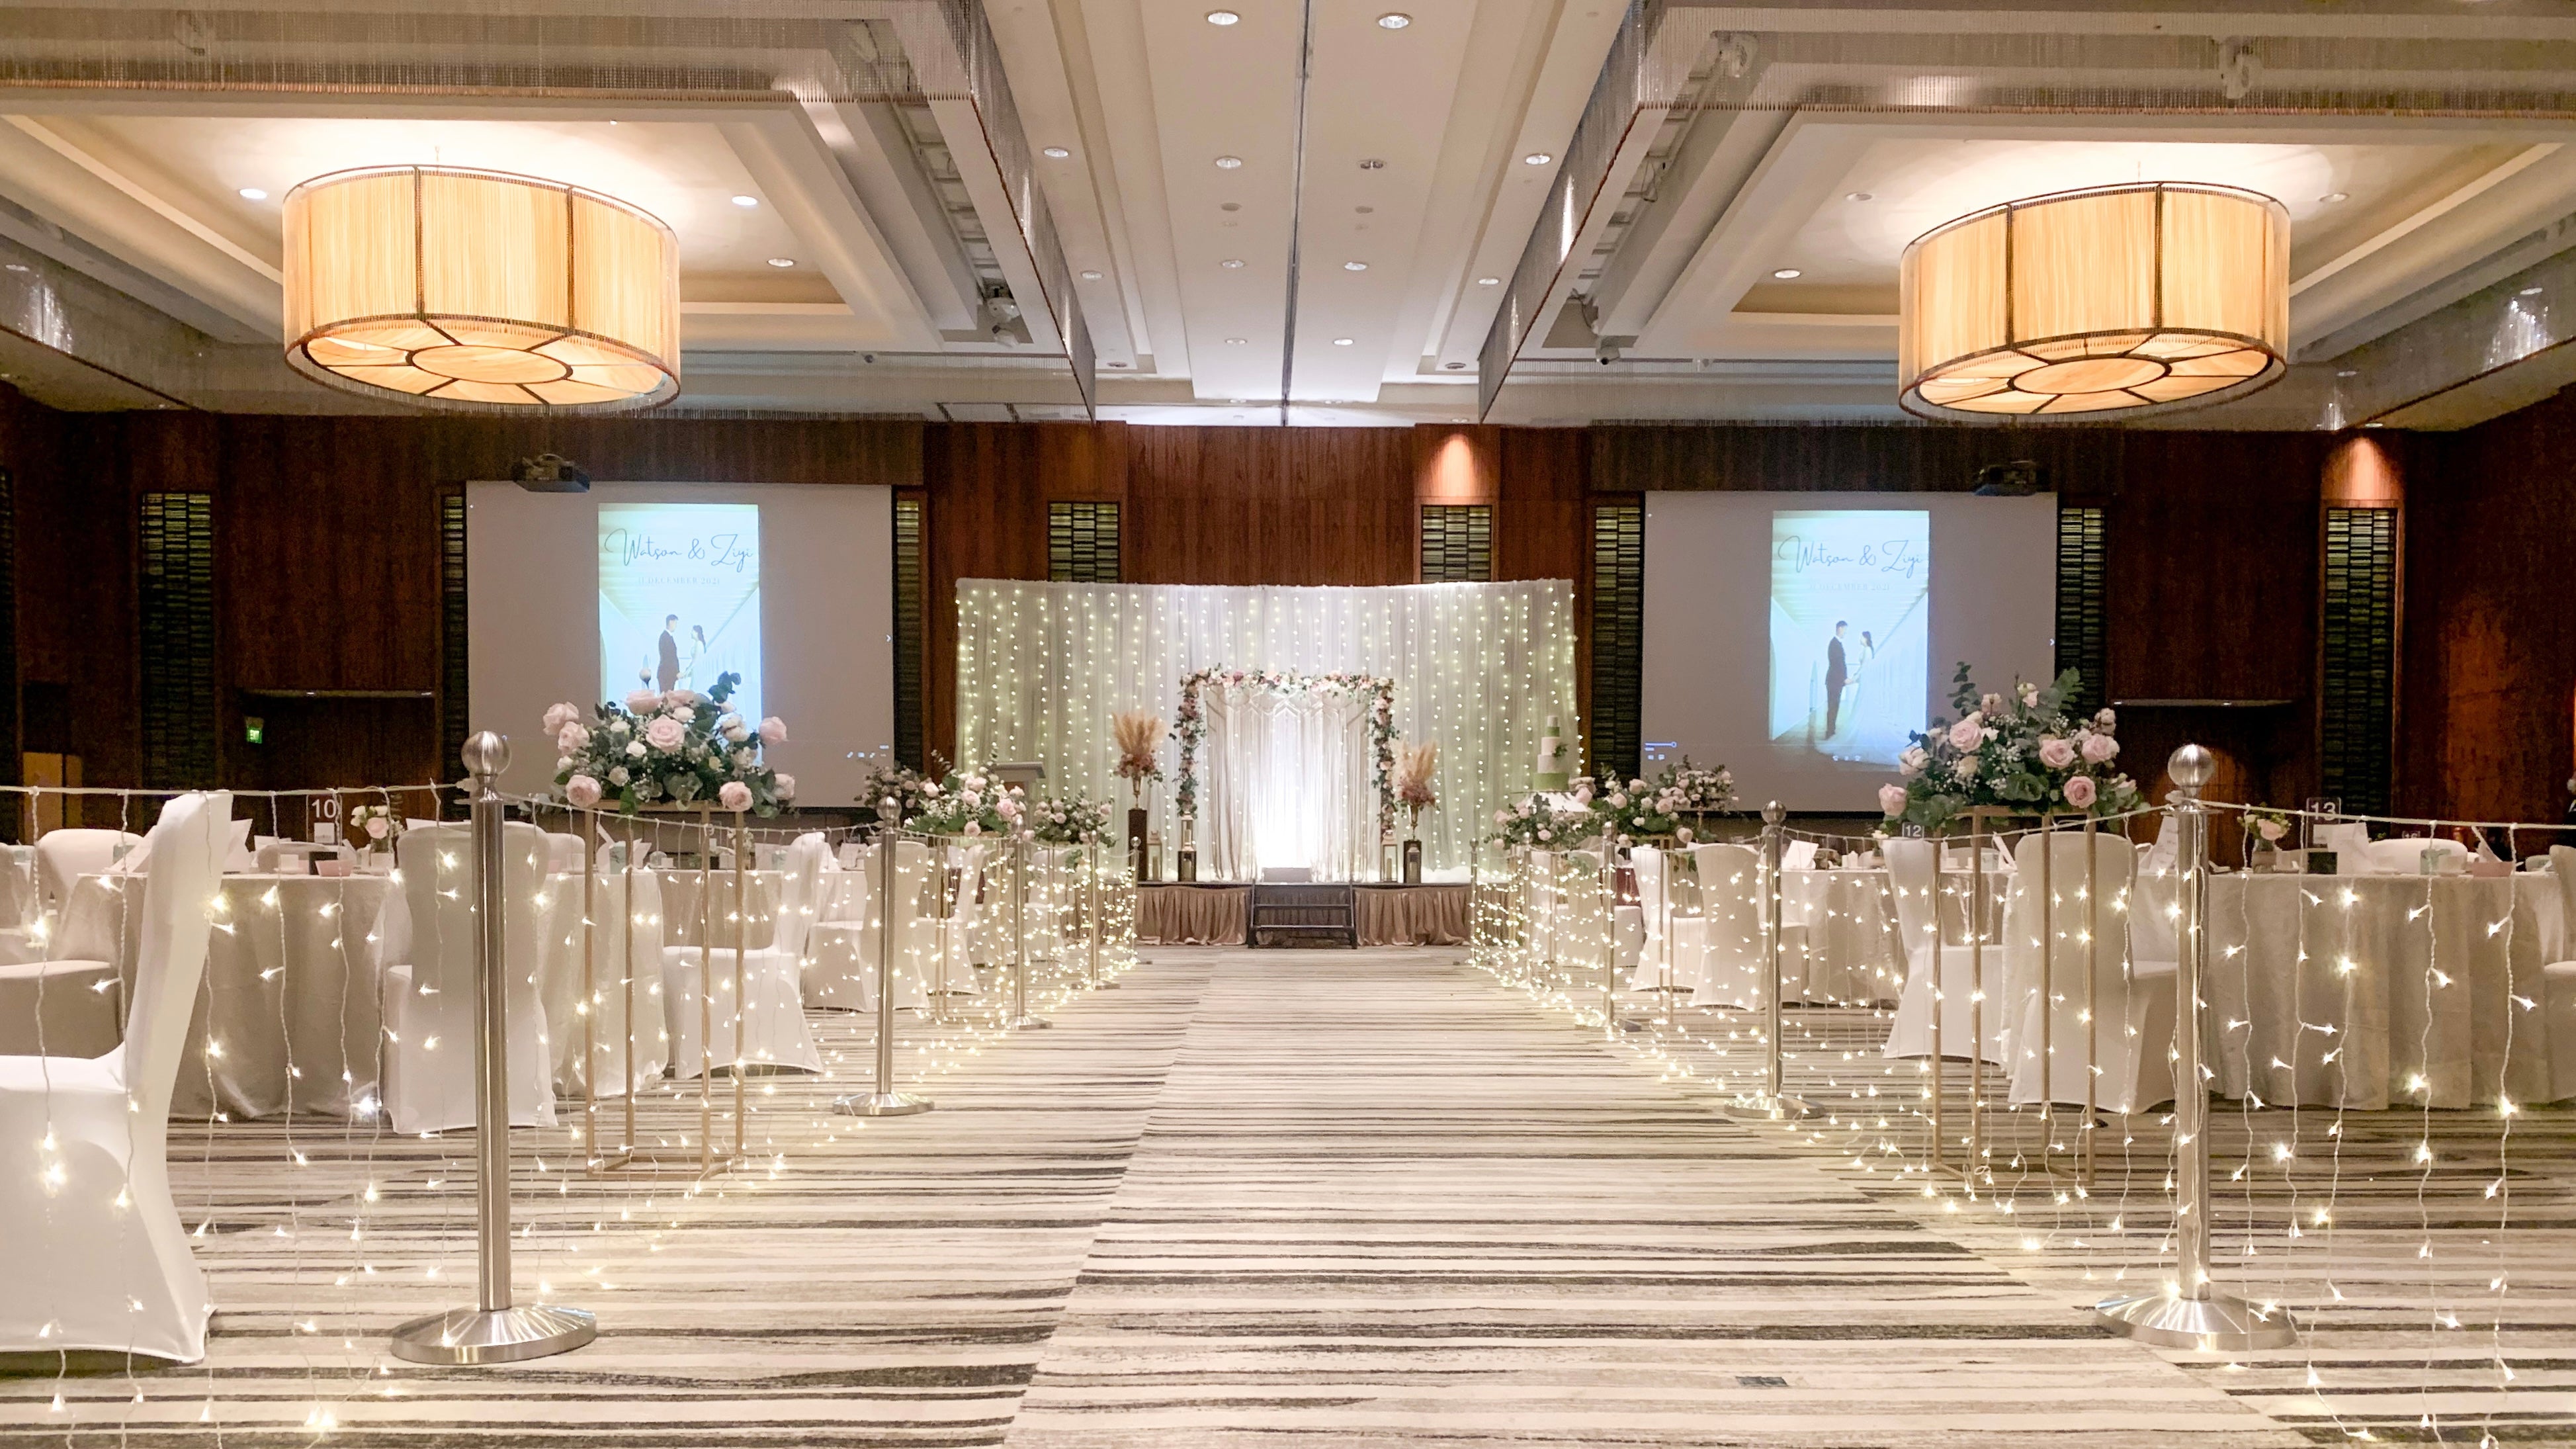 Wedding Ballroom Decor in Singapore - Fairylight Aisle Enhancement  (Venue: Amara Sanctuary Resort Sentosa)